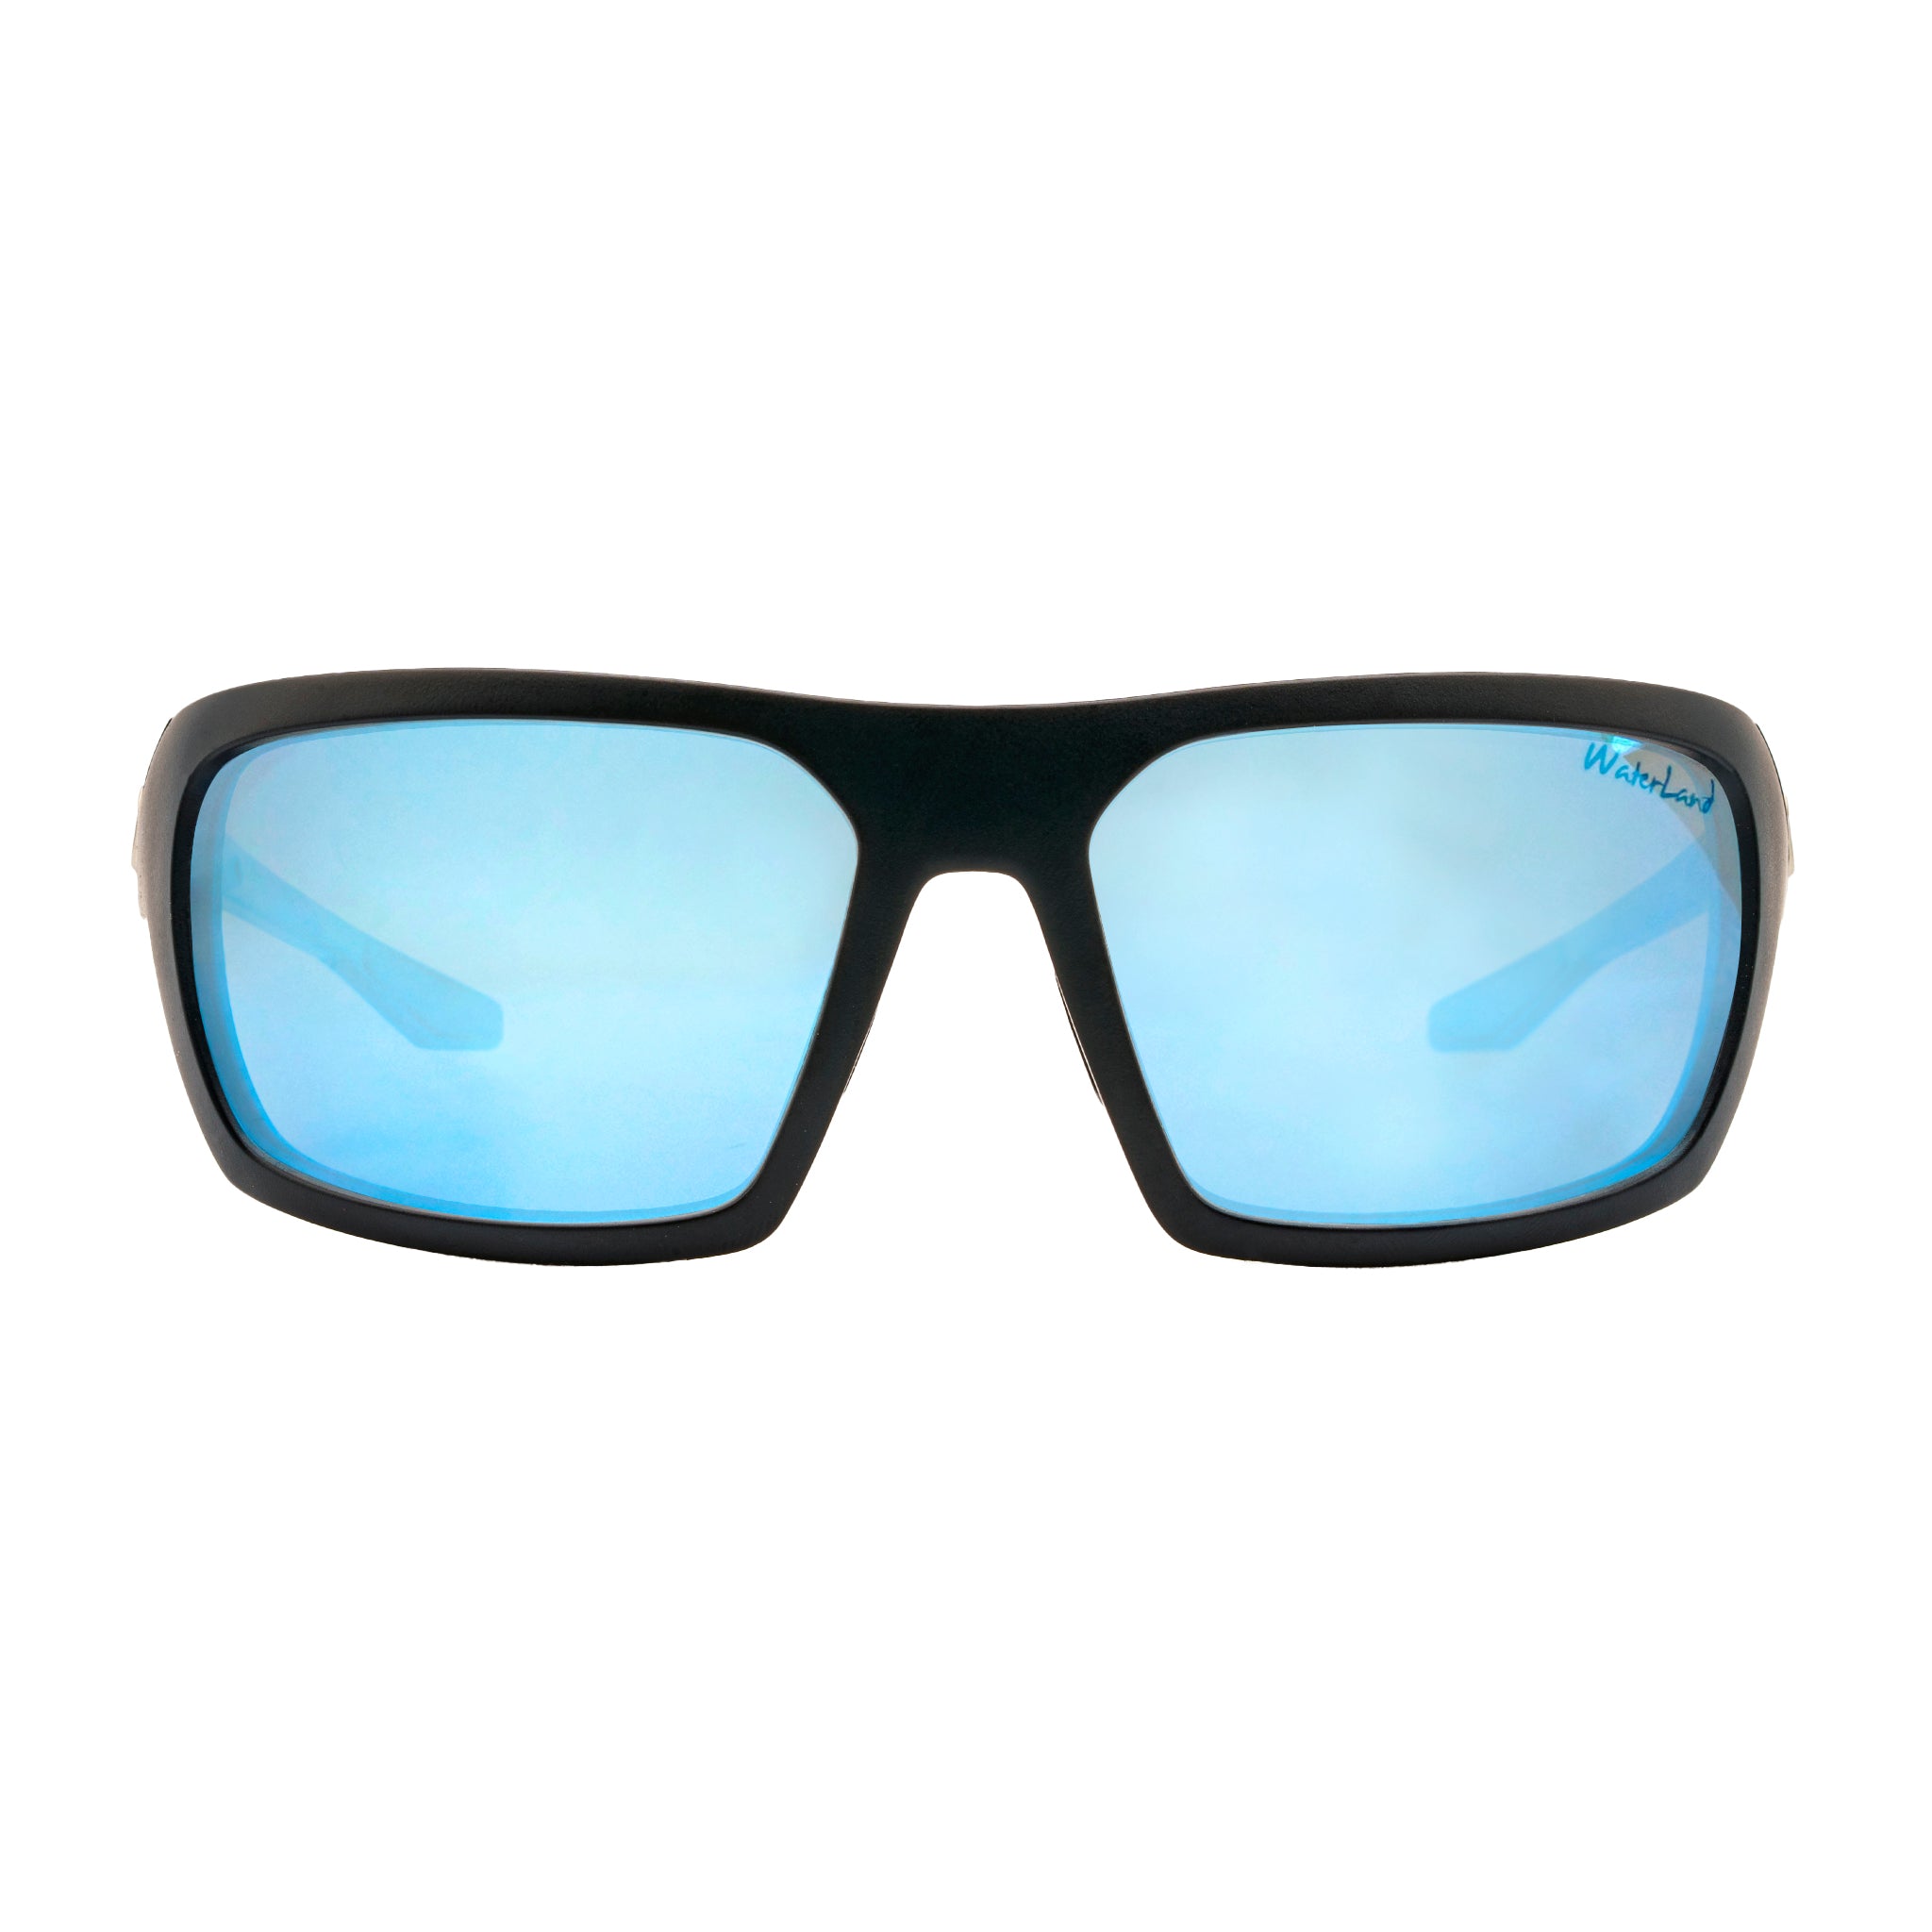 Waterland Fishing Sunglasses – Tackle Addict